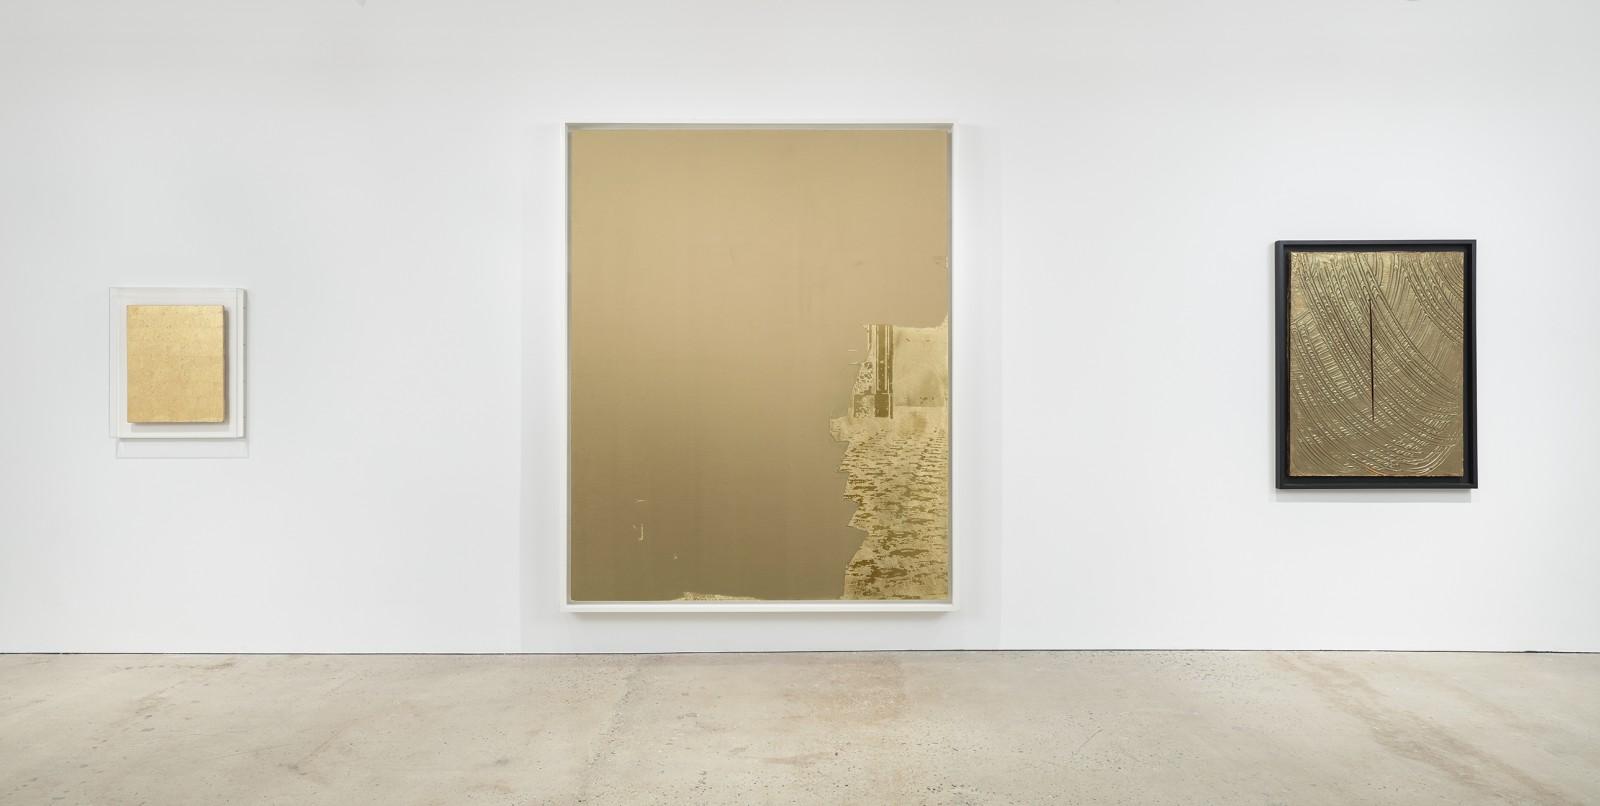 Vue de l'exposition "Monochrome: A Dialogue between Burri, Fontana, Klein, Manzoni, and Stingel", Nahmad Contemporary, 2017 (MG 6)